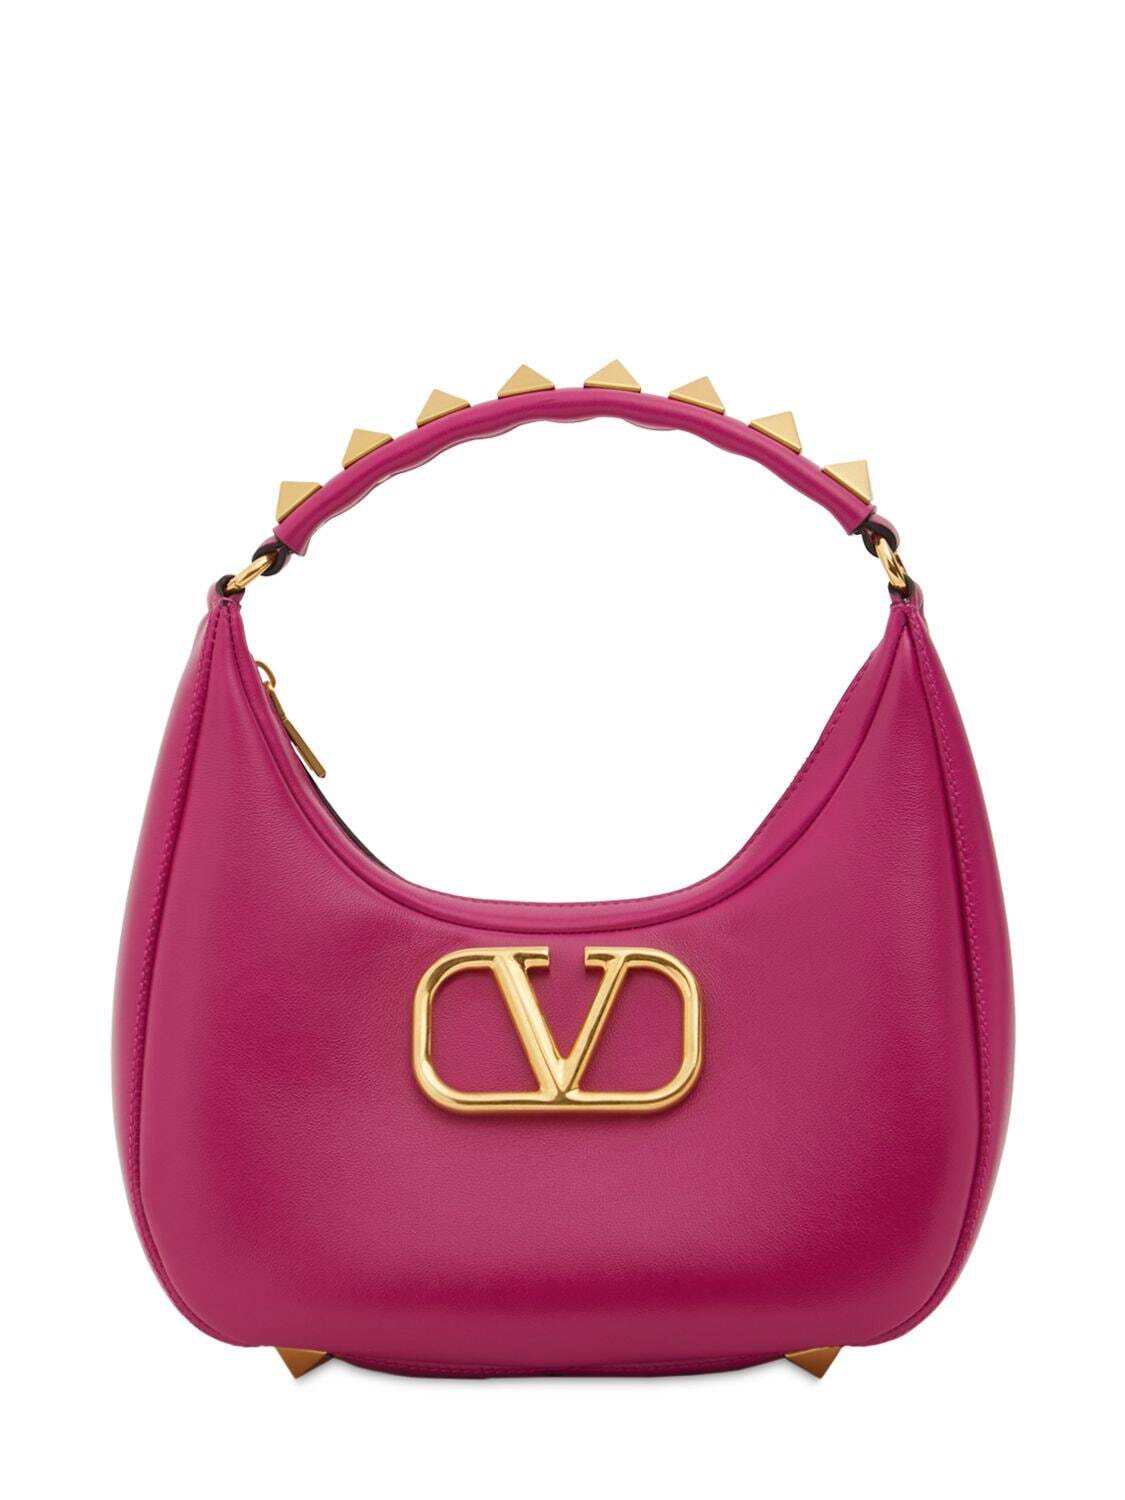 VALENTINO GARAVANI Stud Sign Leather Hobo Bag in rose / violet